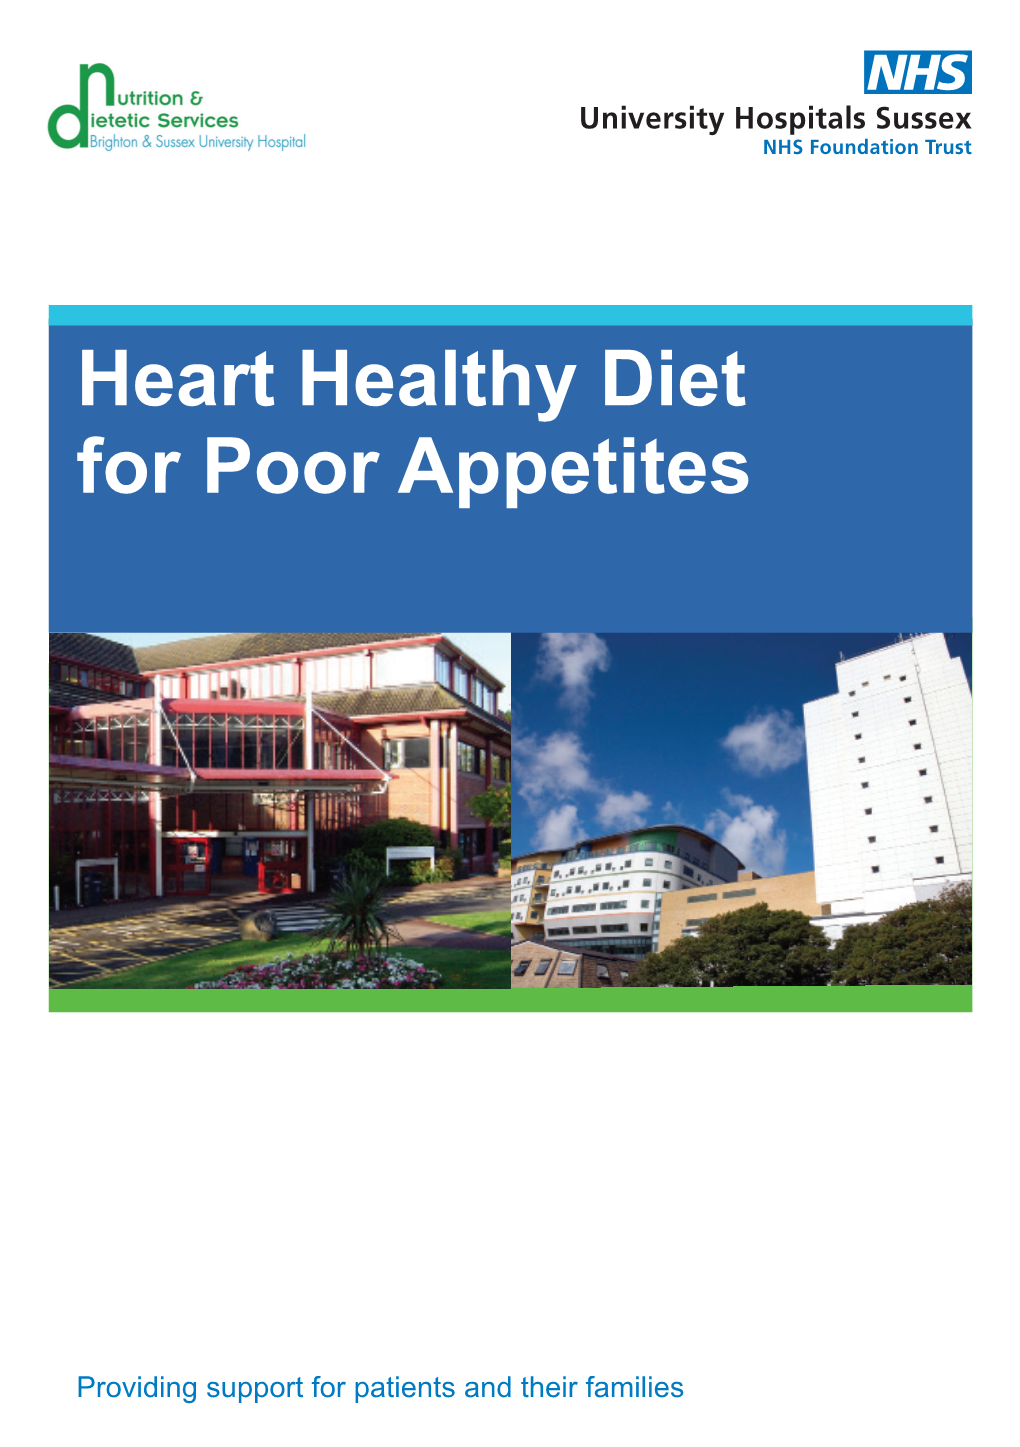 Heart Healthy Diet for Poor Appetites